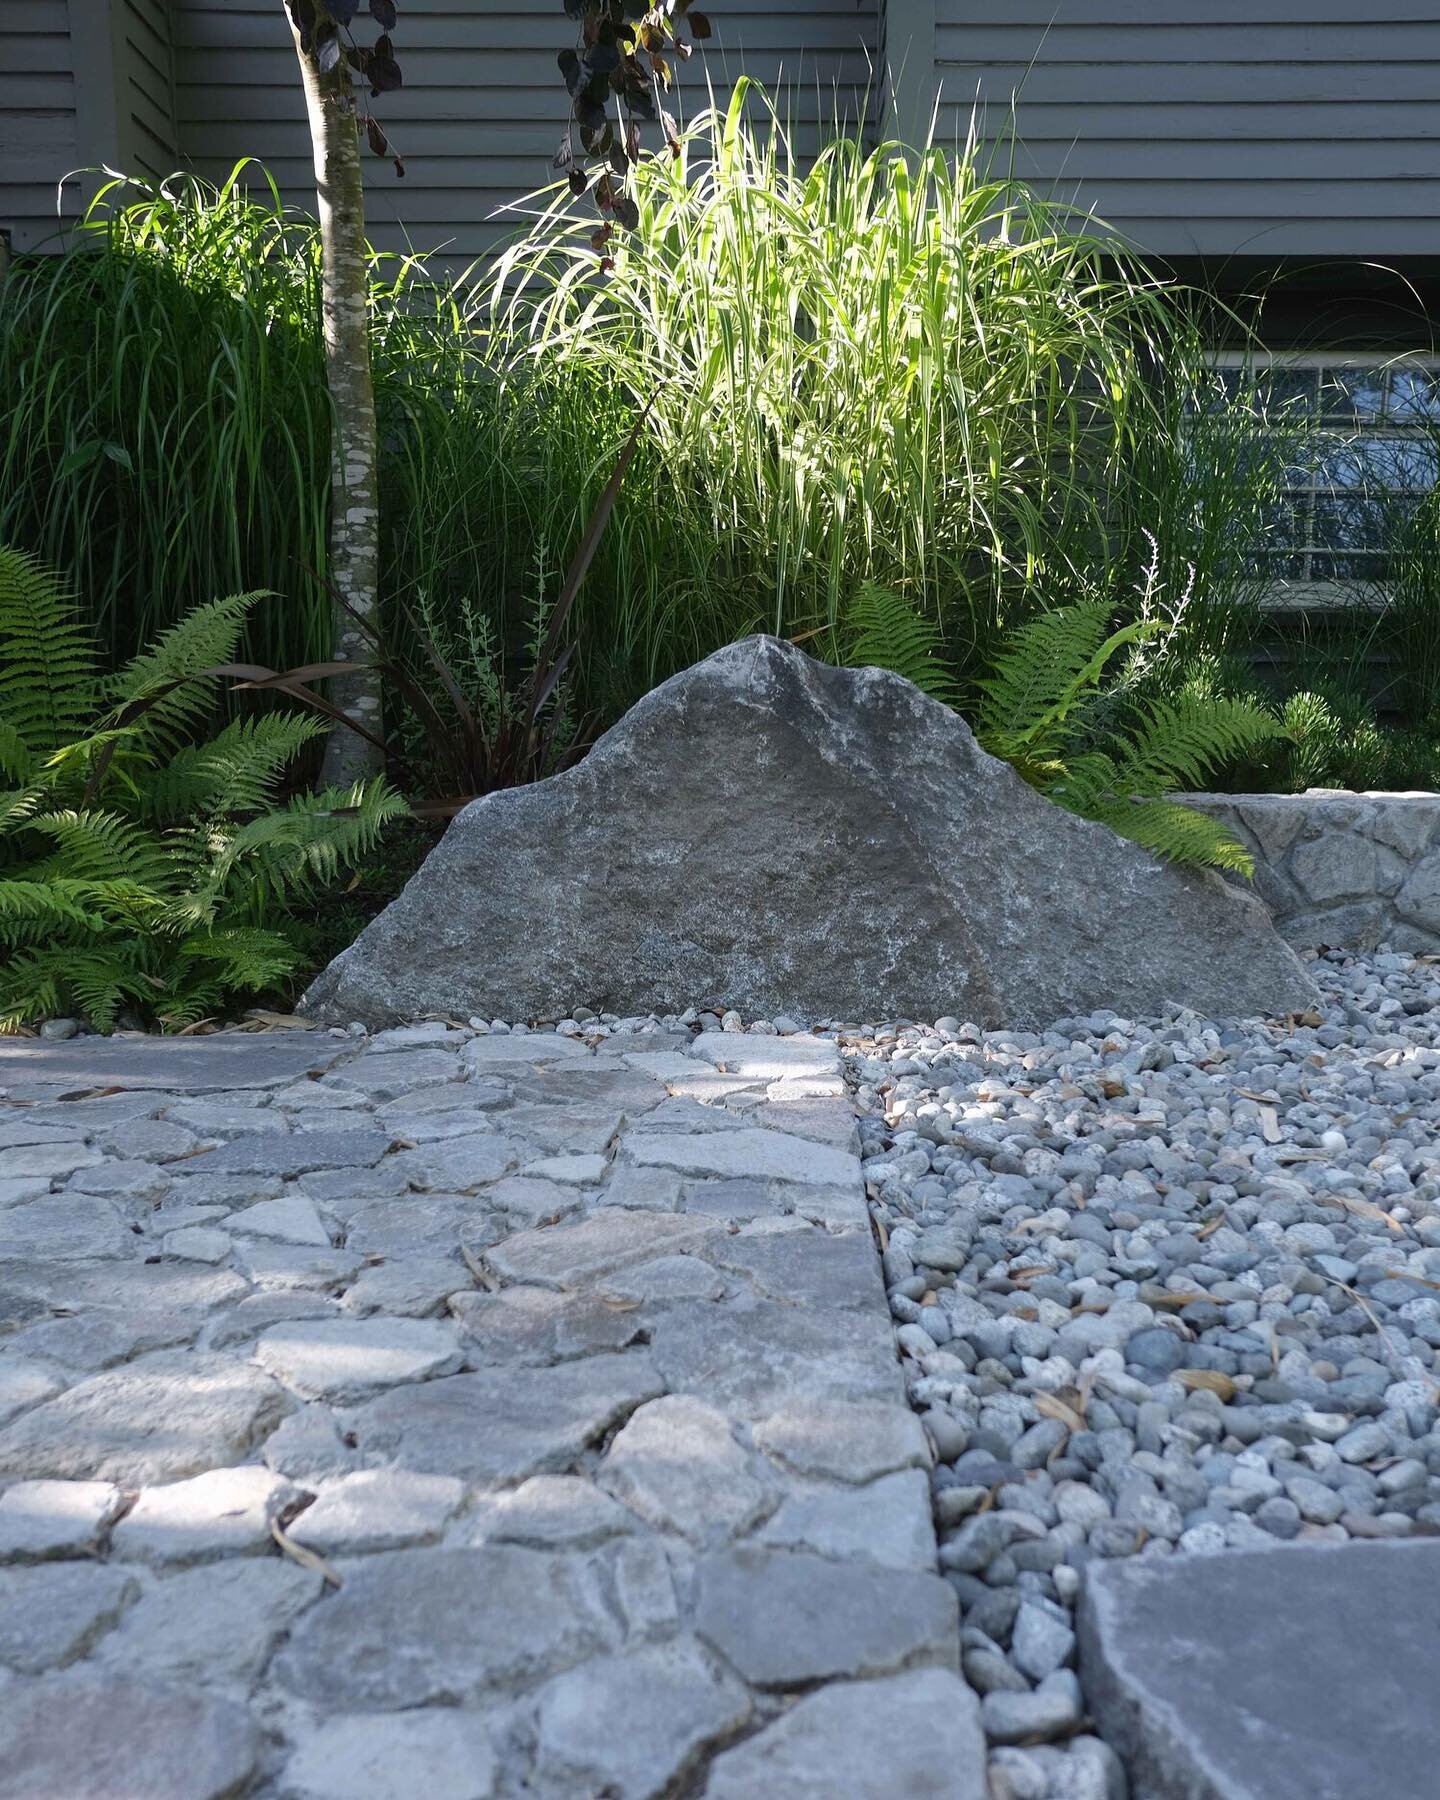 -
Ceramist Studio Garden
Vancouver, BC

Artful stonework